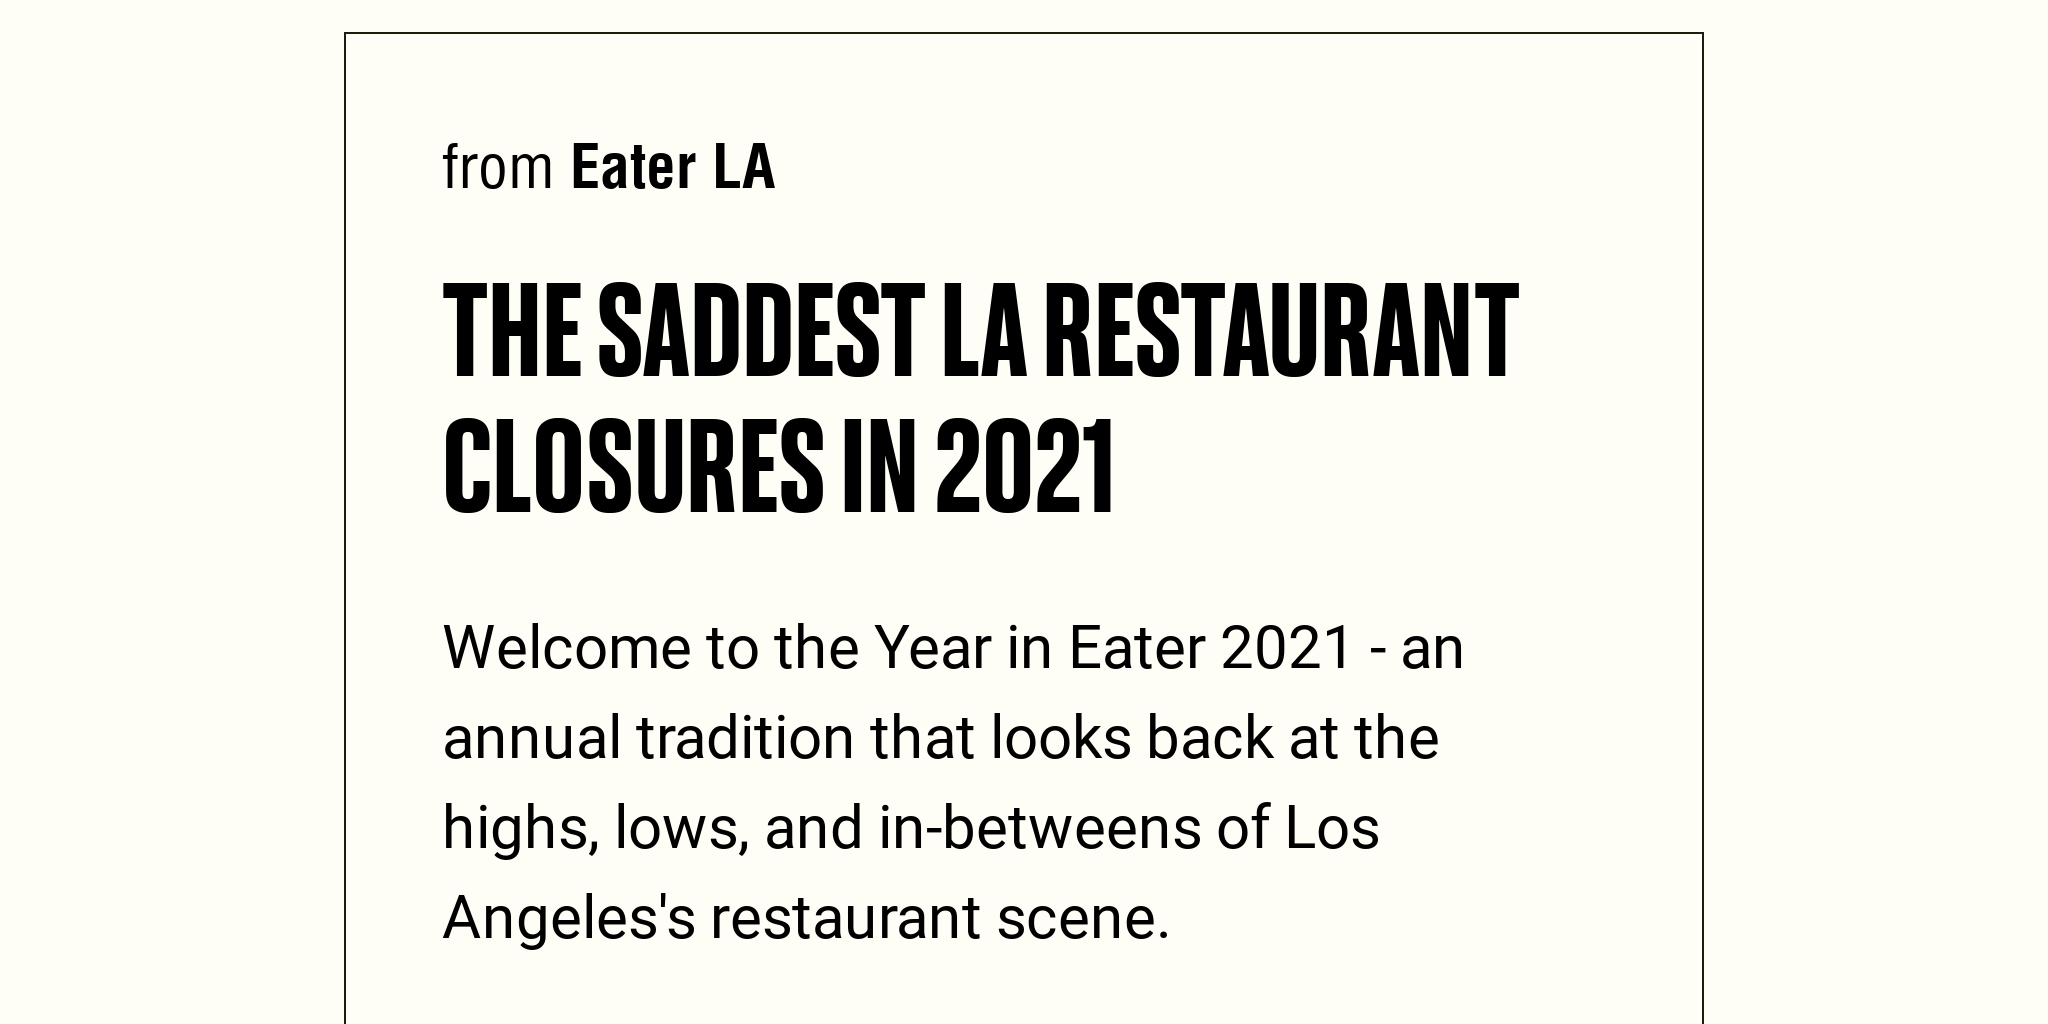 The Saddest LA Restaurant Closures in 2021 Briefly